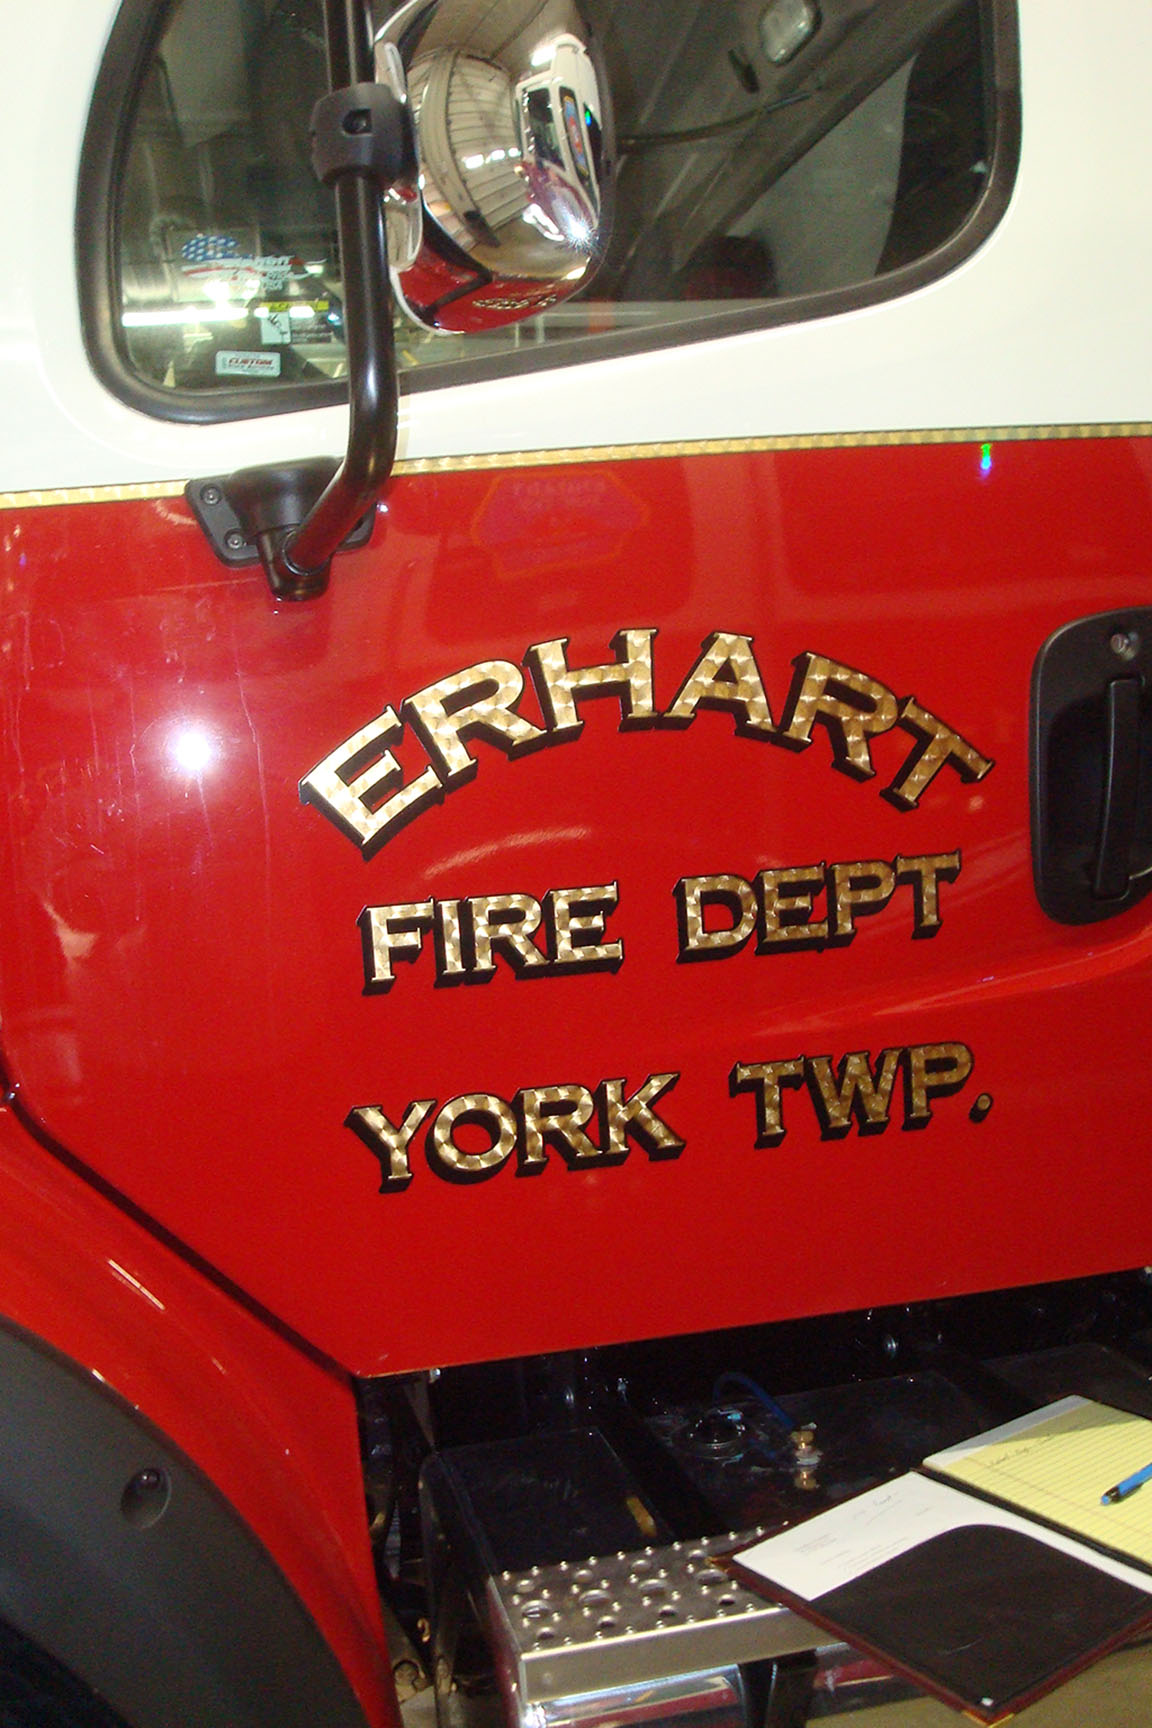 Erhart F.D. – York Twp.